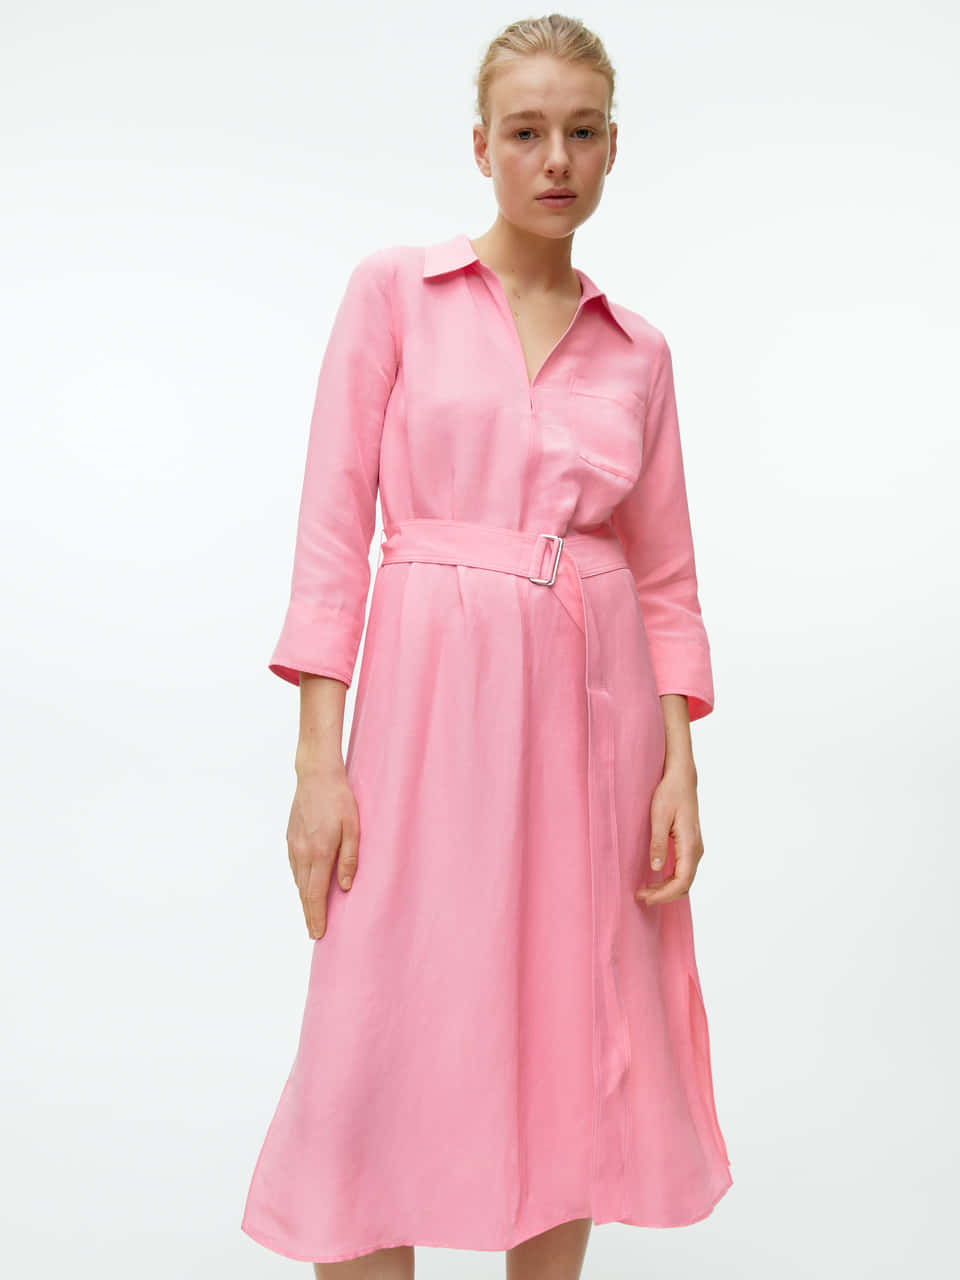 Download A Woman Wearing A Pink Shirt Dress | Wallpapers.com